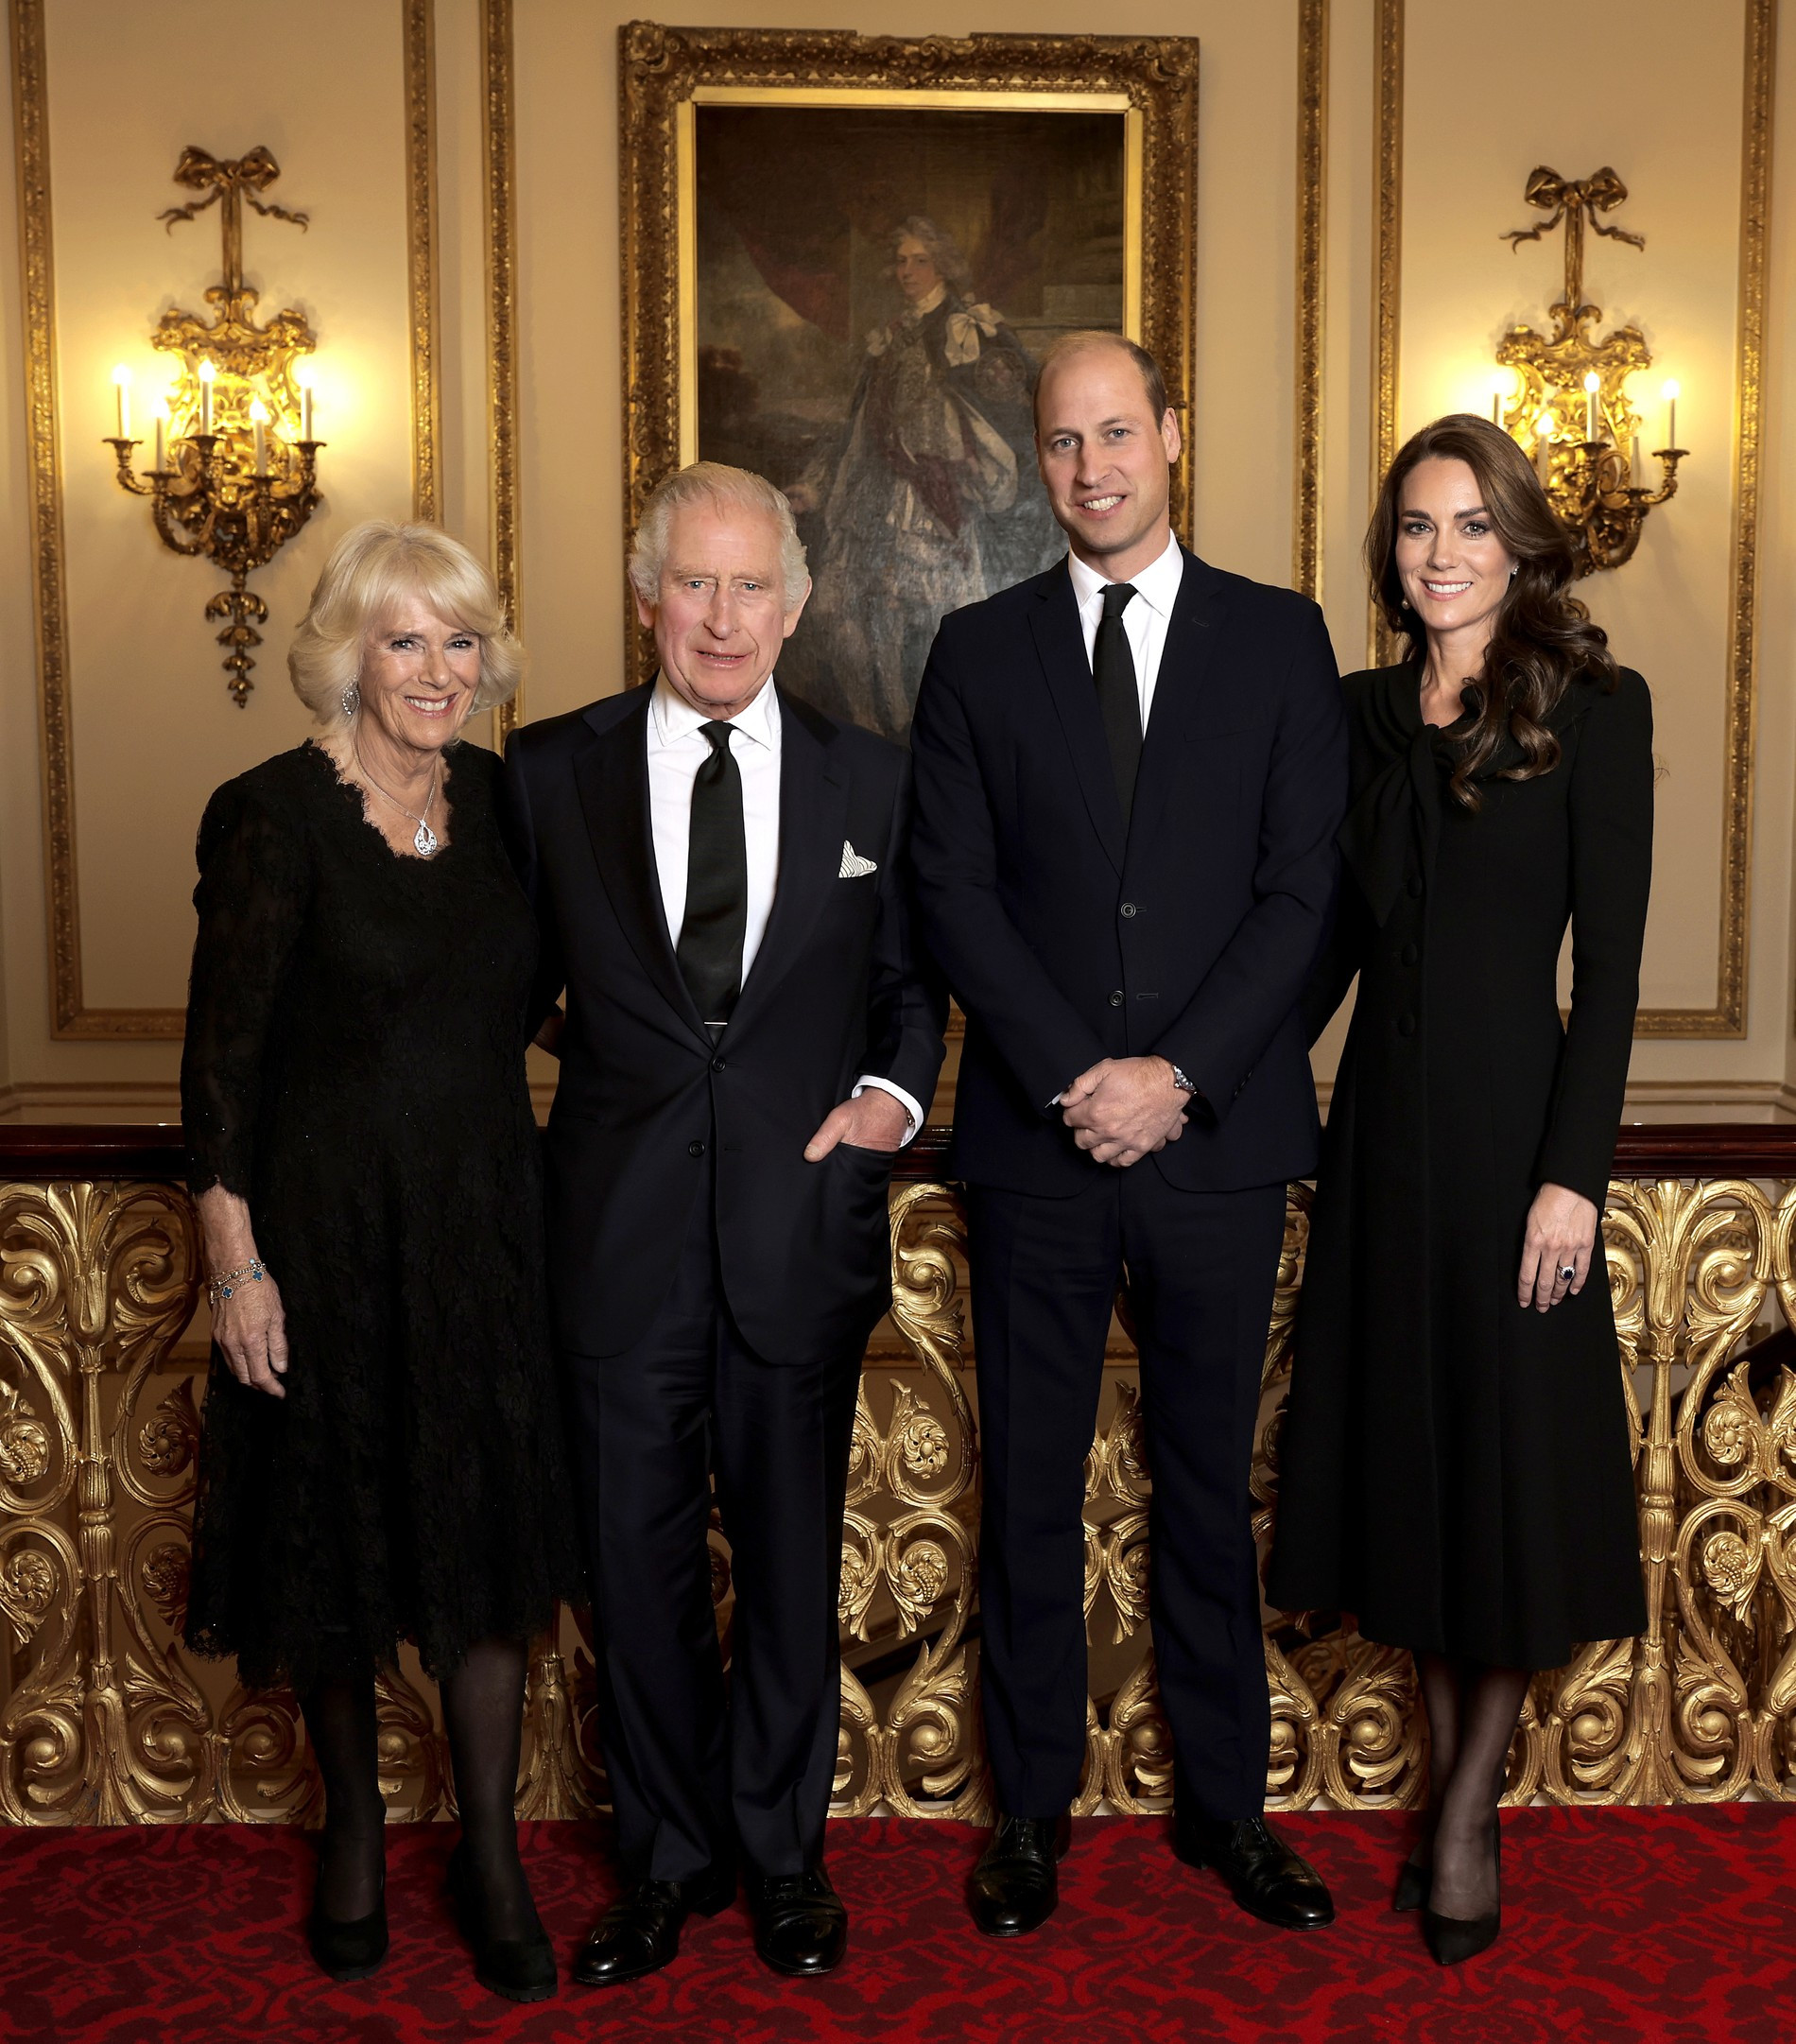 Королева-консорт Камилла, король Карл III, принц Уильям и Кейт Миддлтон
Фото: Getty Images